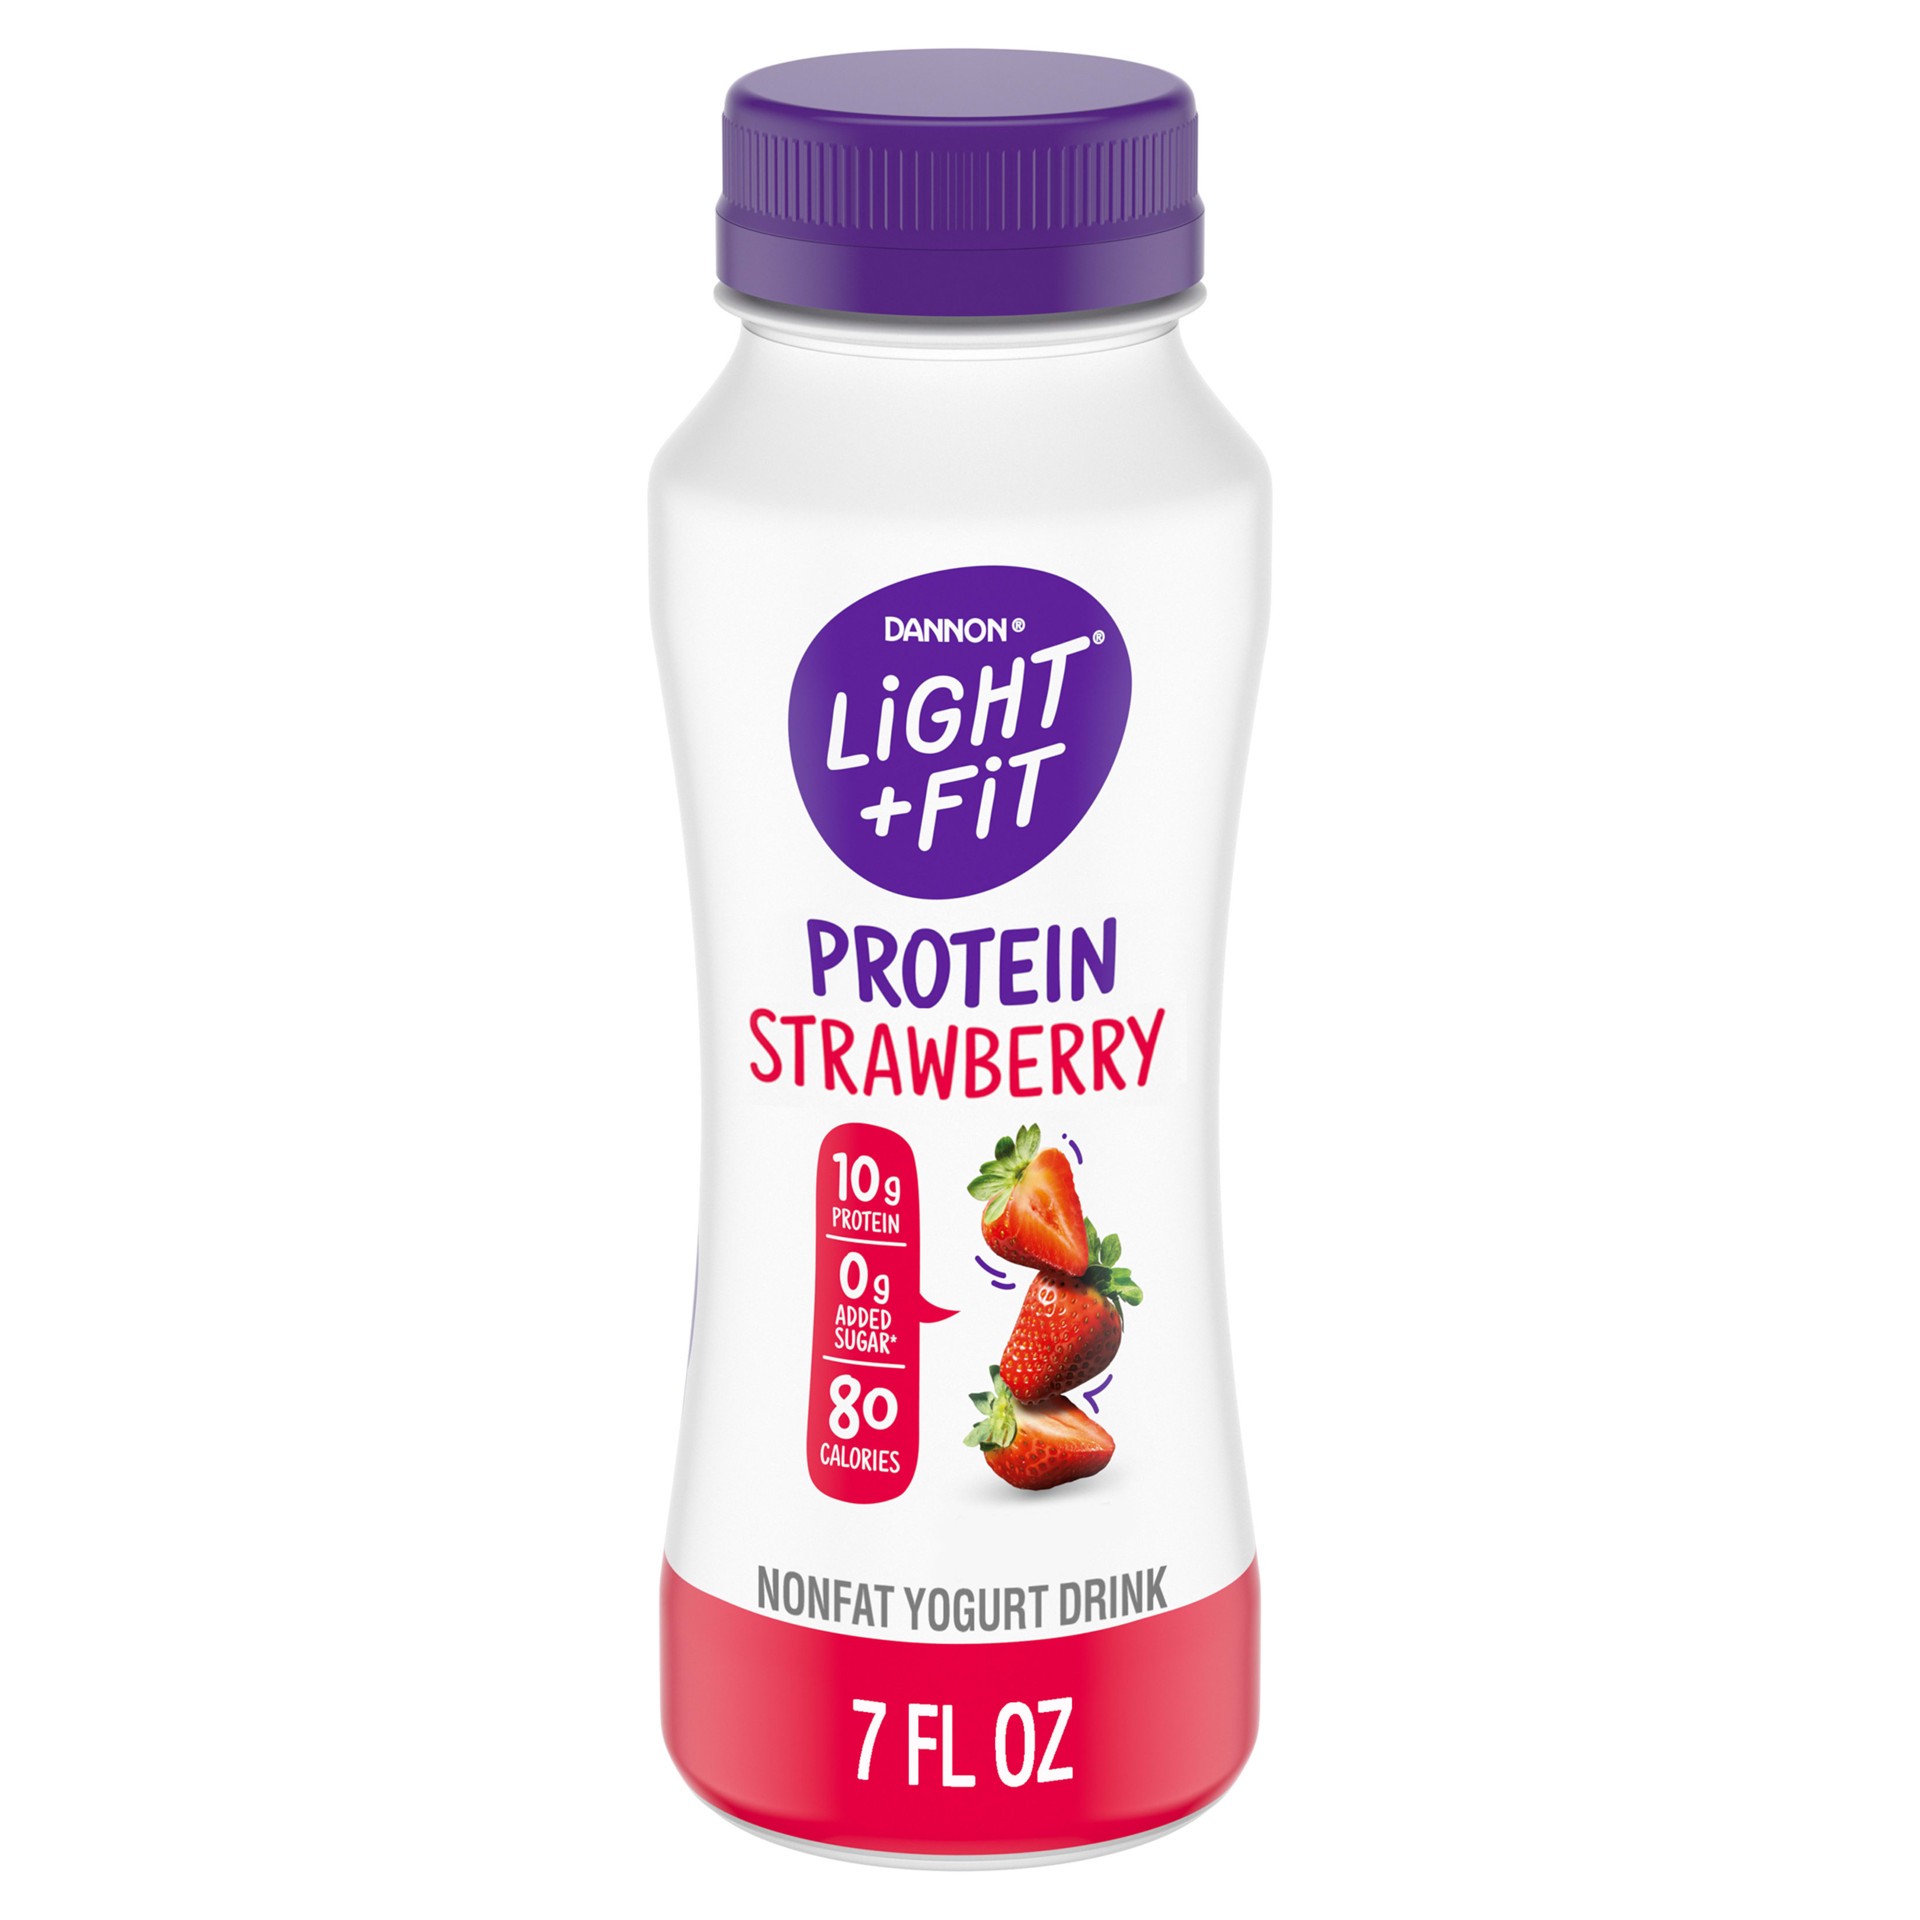 slide 9 of 14, Light + Fit Dannon Light + Fit Nonfat Yogurt Drink Protein Smoothie, Strawberry, 0g Added Sugar*, 7 oz., 7 fl oz